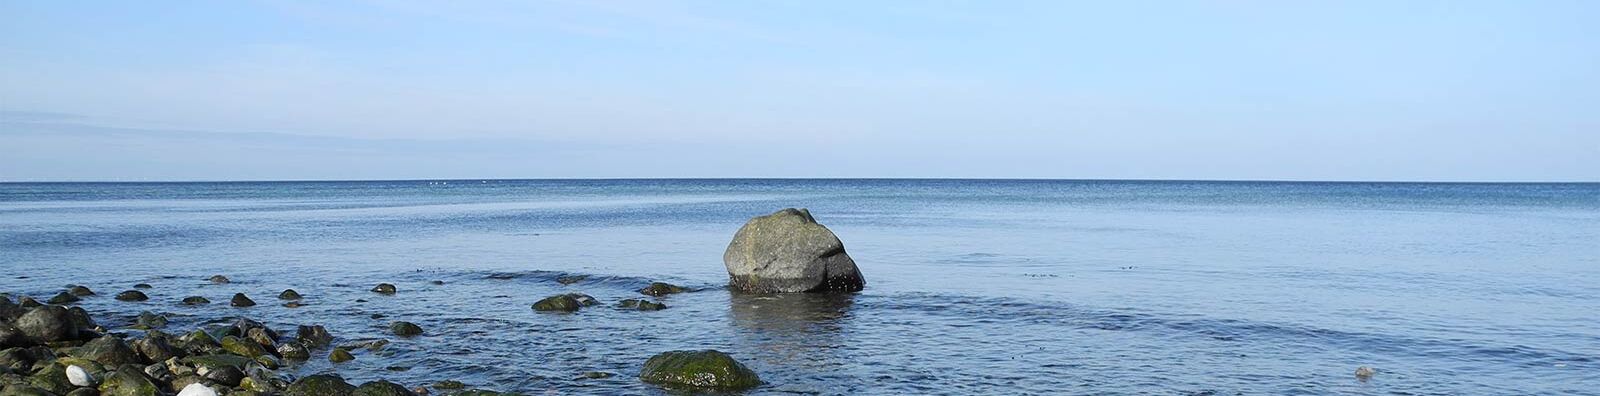 Felsen in der Ostsee